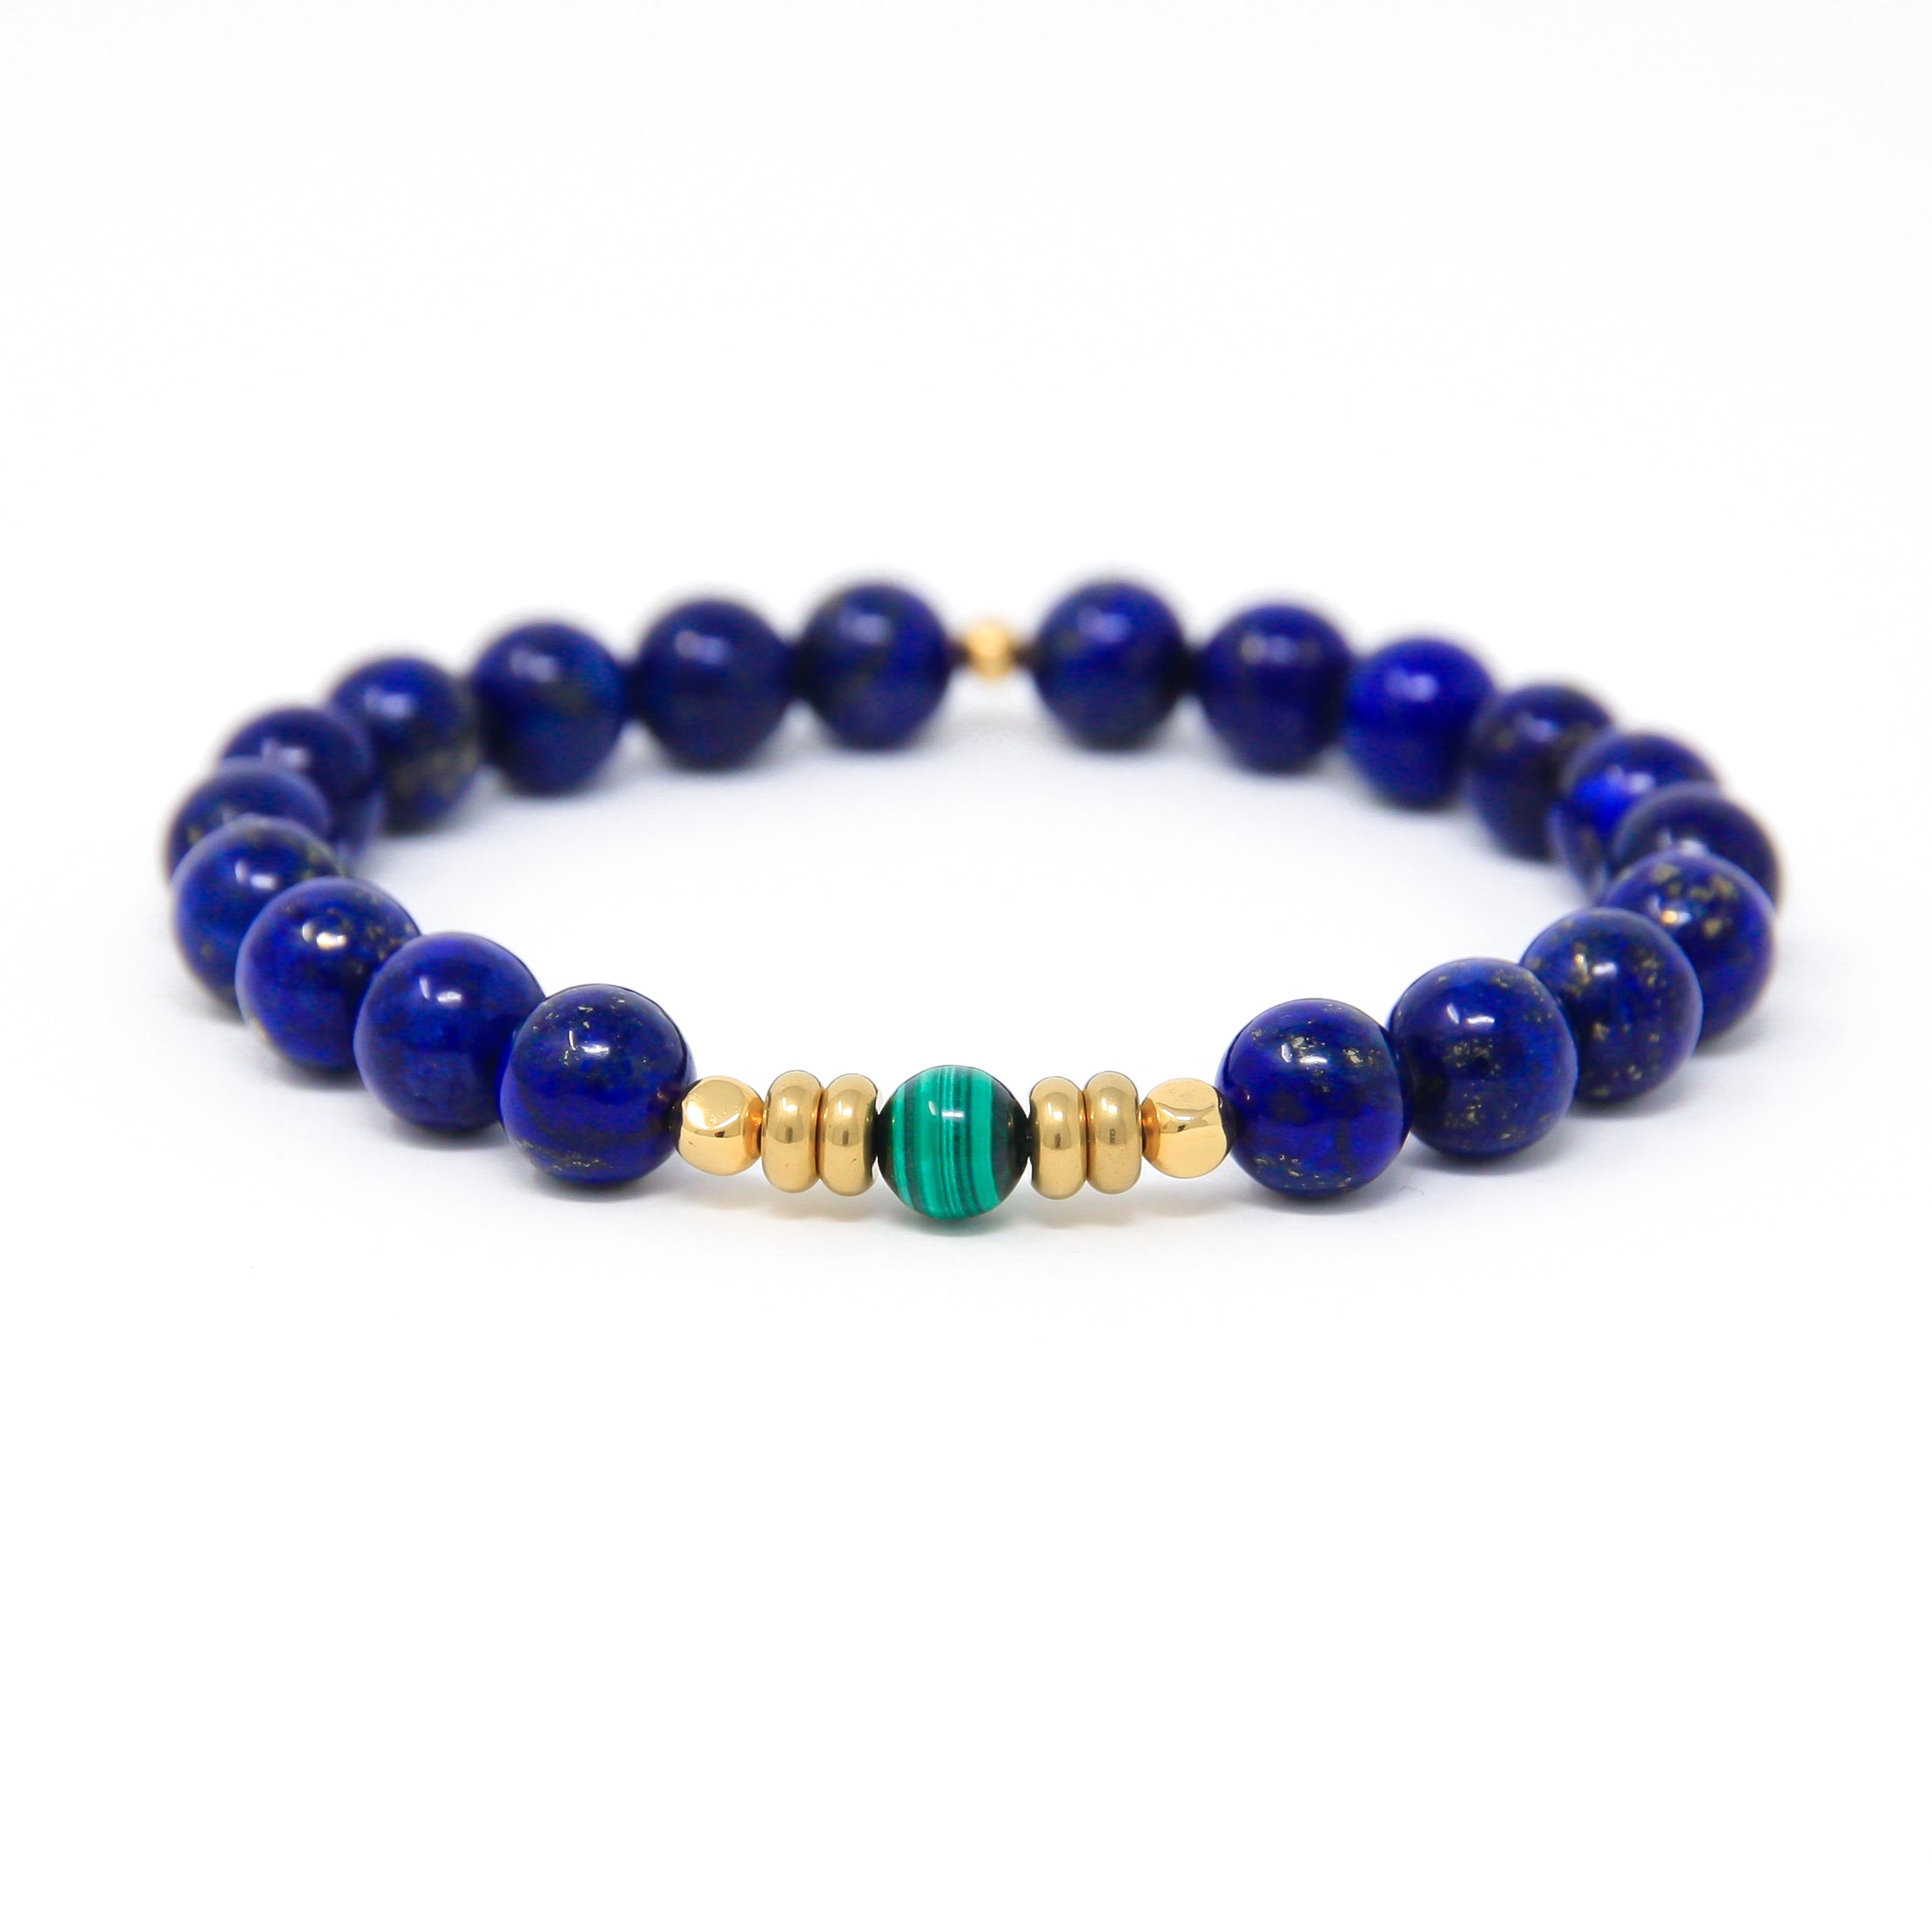 Lapis Lazuli yoga bracelet, Wrist Mala, crystal healing jewelry